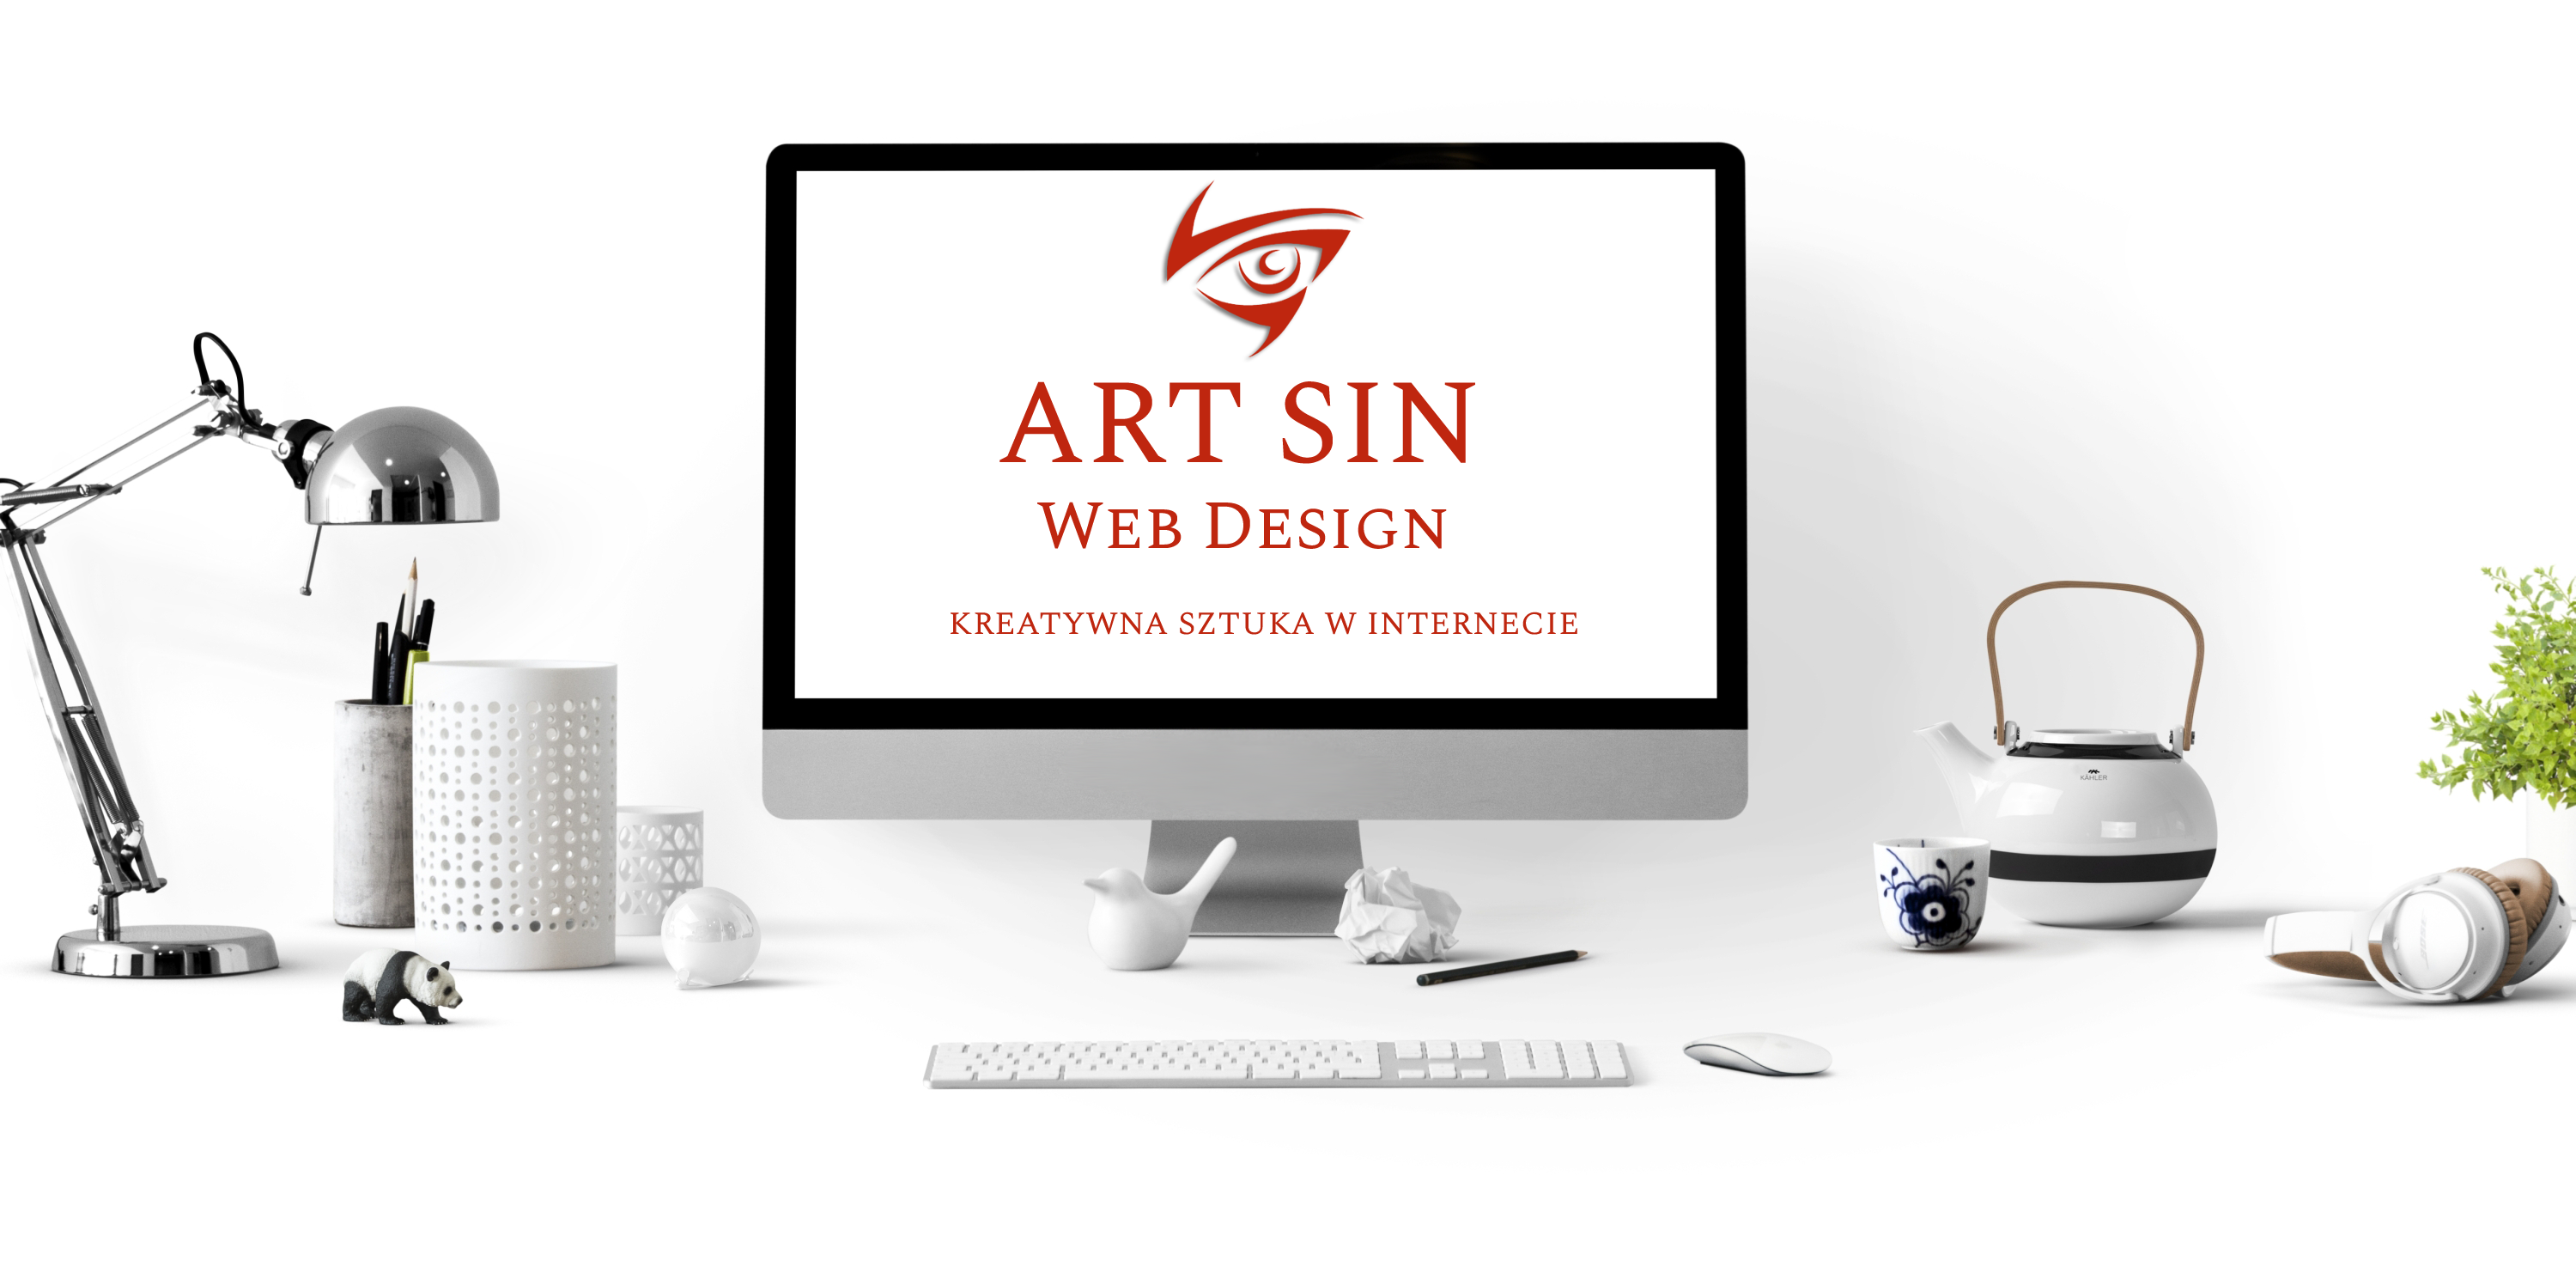 Art Sin Web Design. Kreatywna sztuka w internecie.